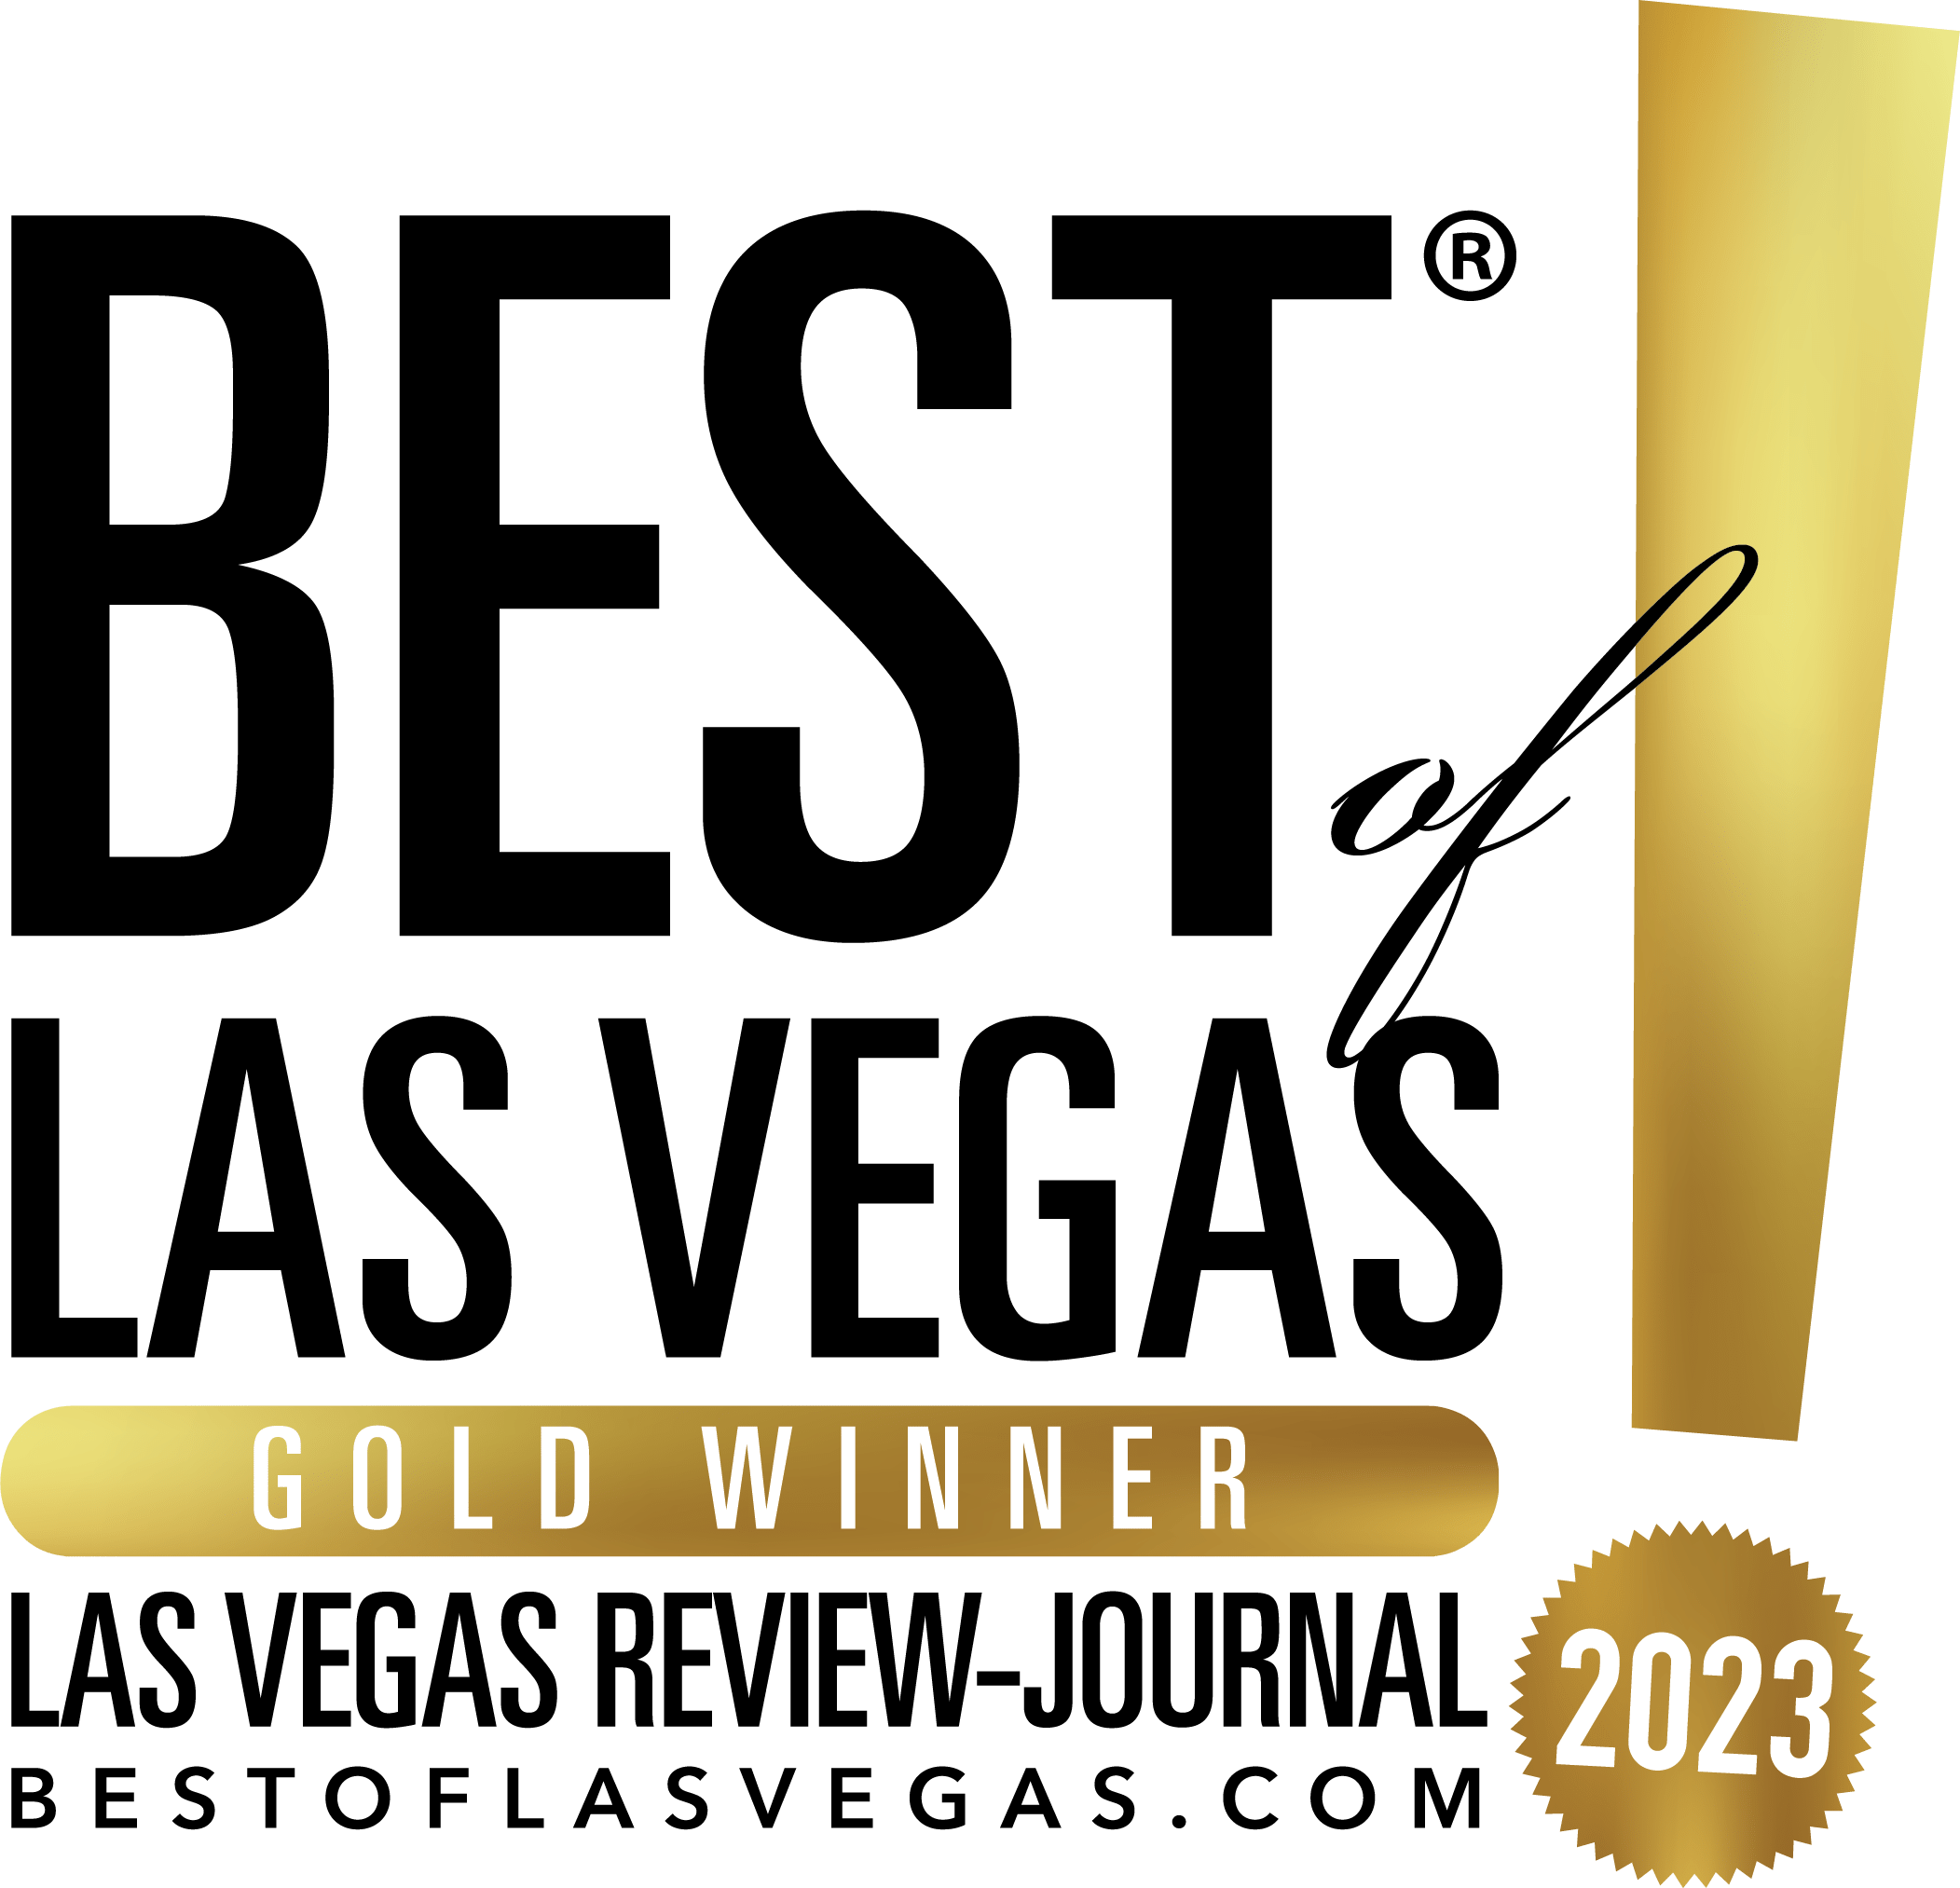 Las vegas review journal best of las vegas gold winner.